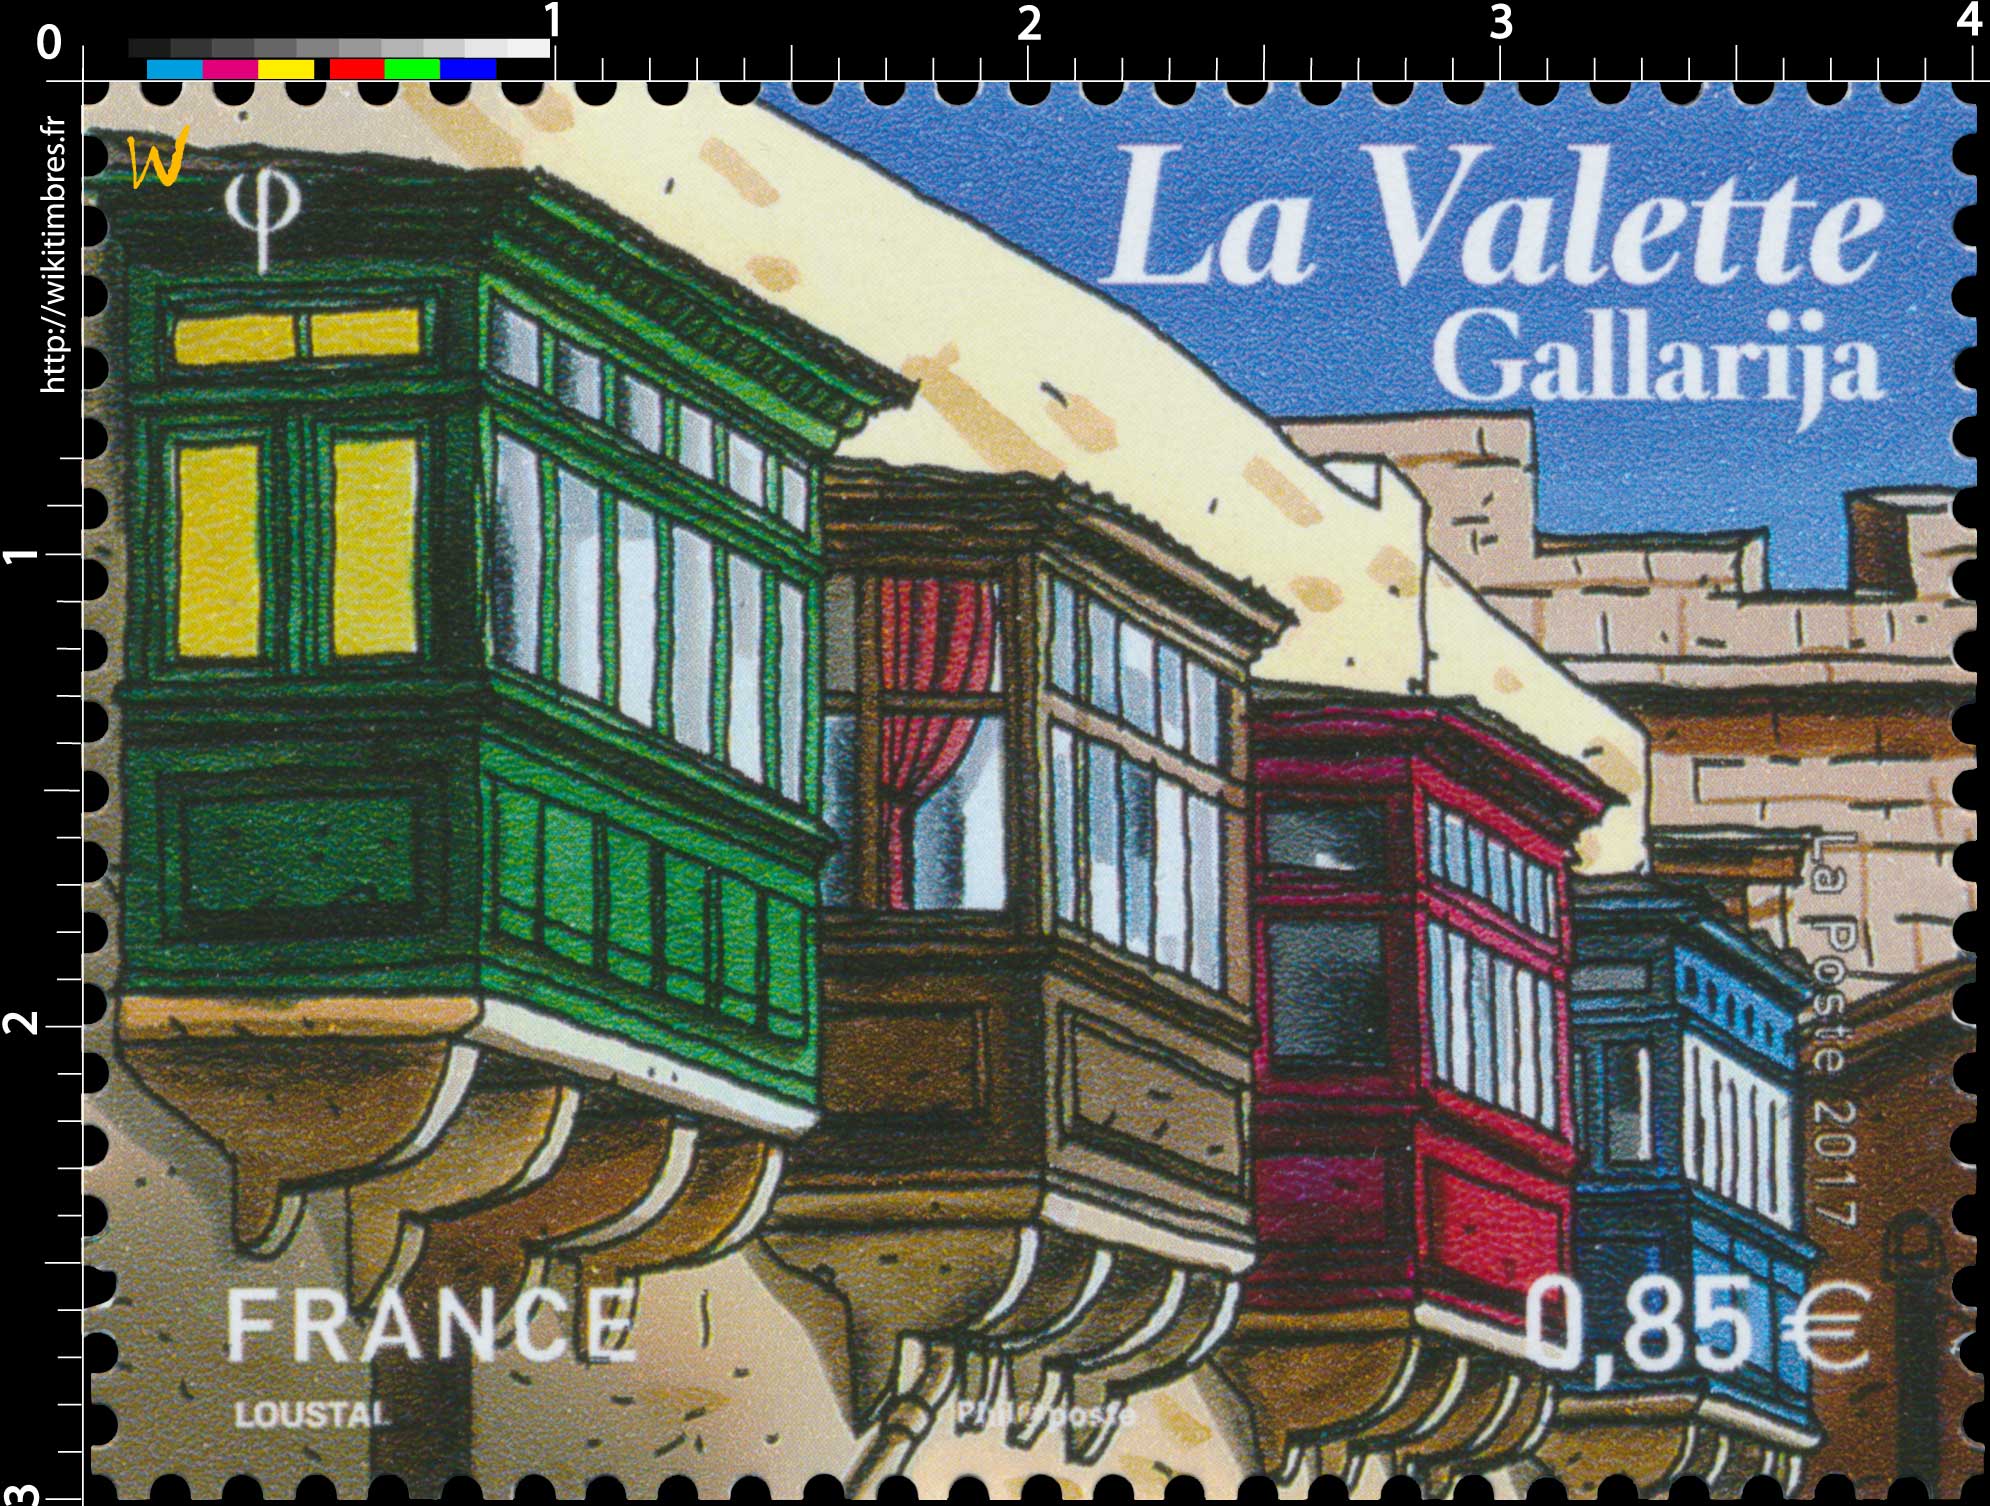 2017 La Valette  Gallarija